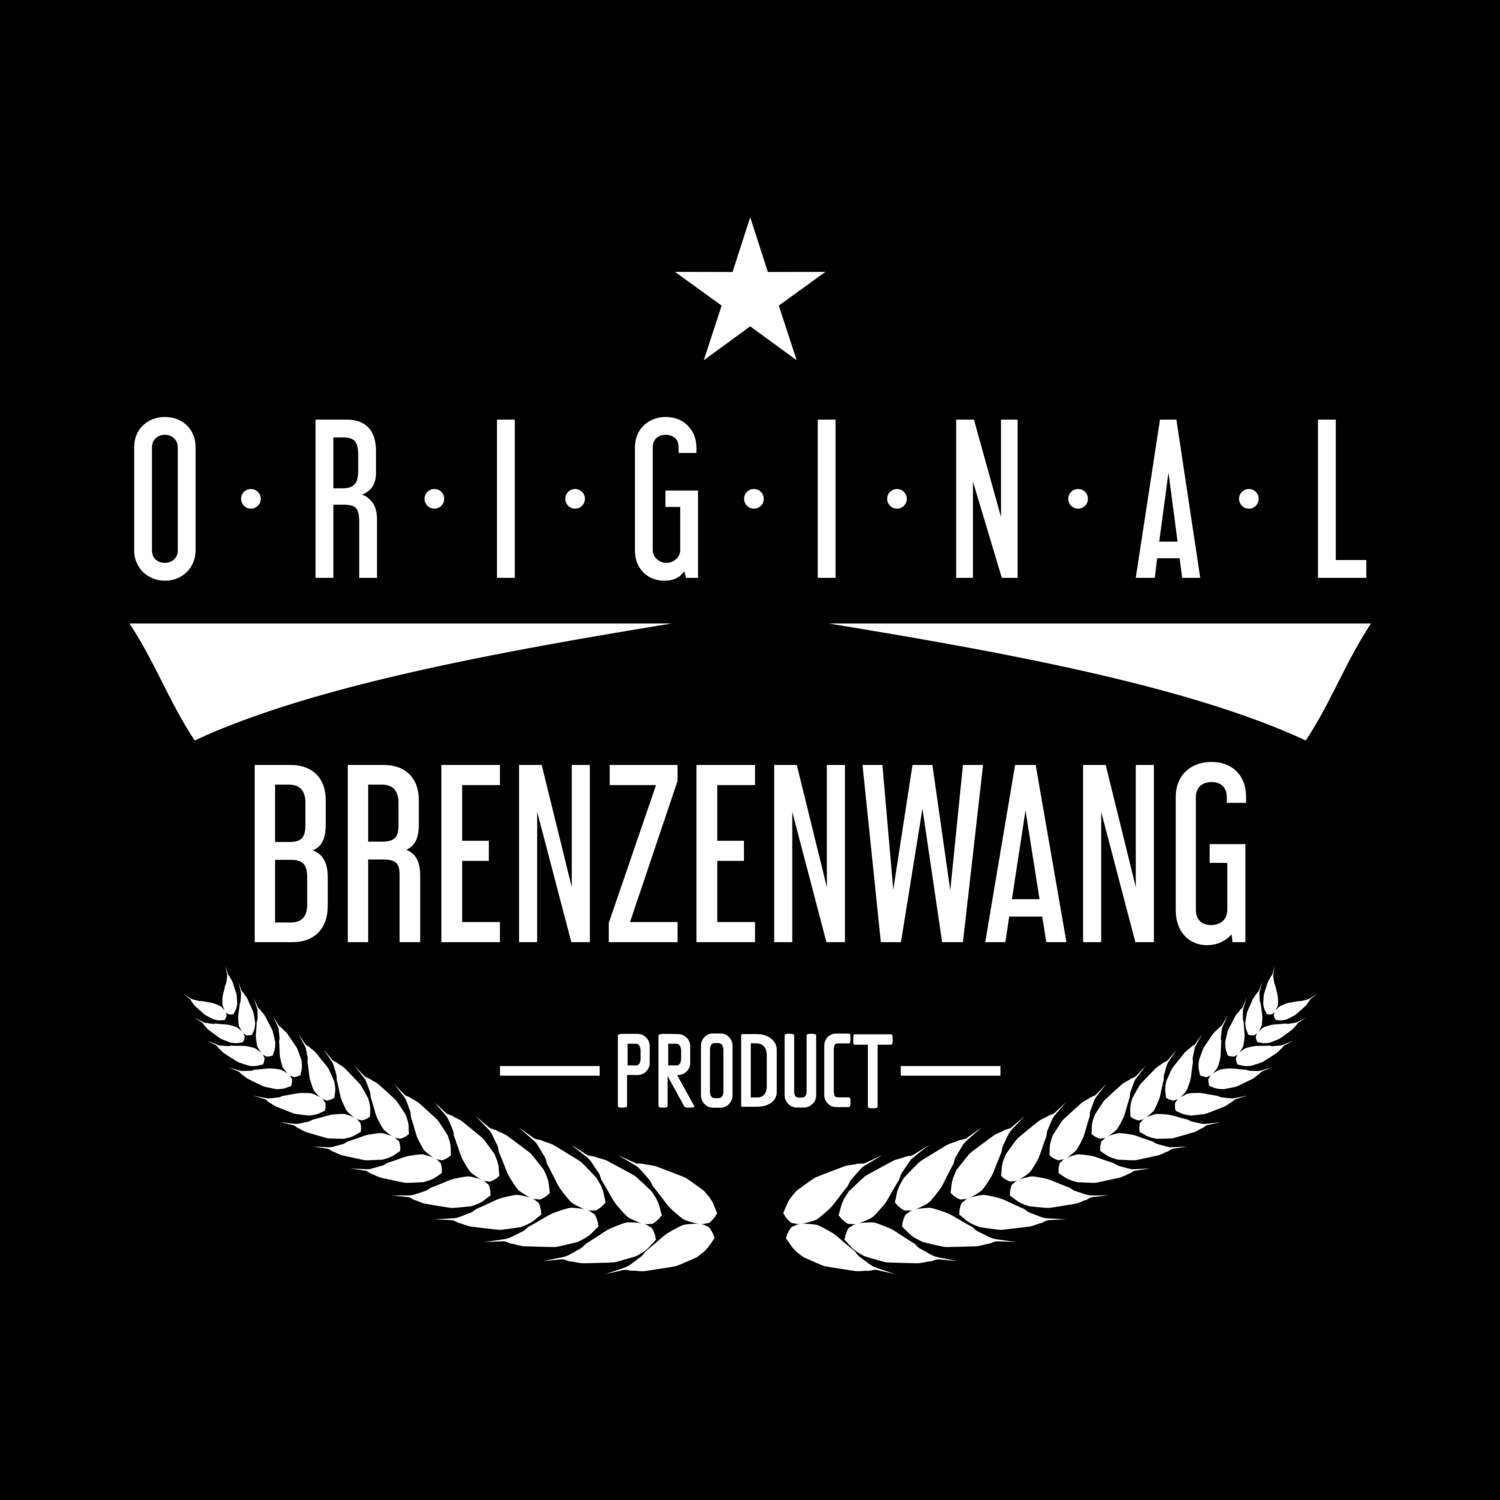 Brenzenwang T-Shirt »Original Product«